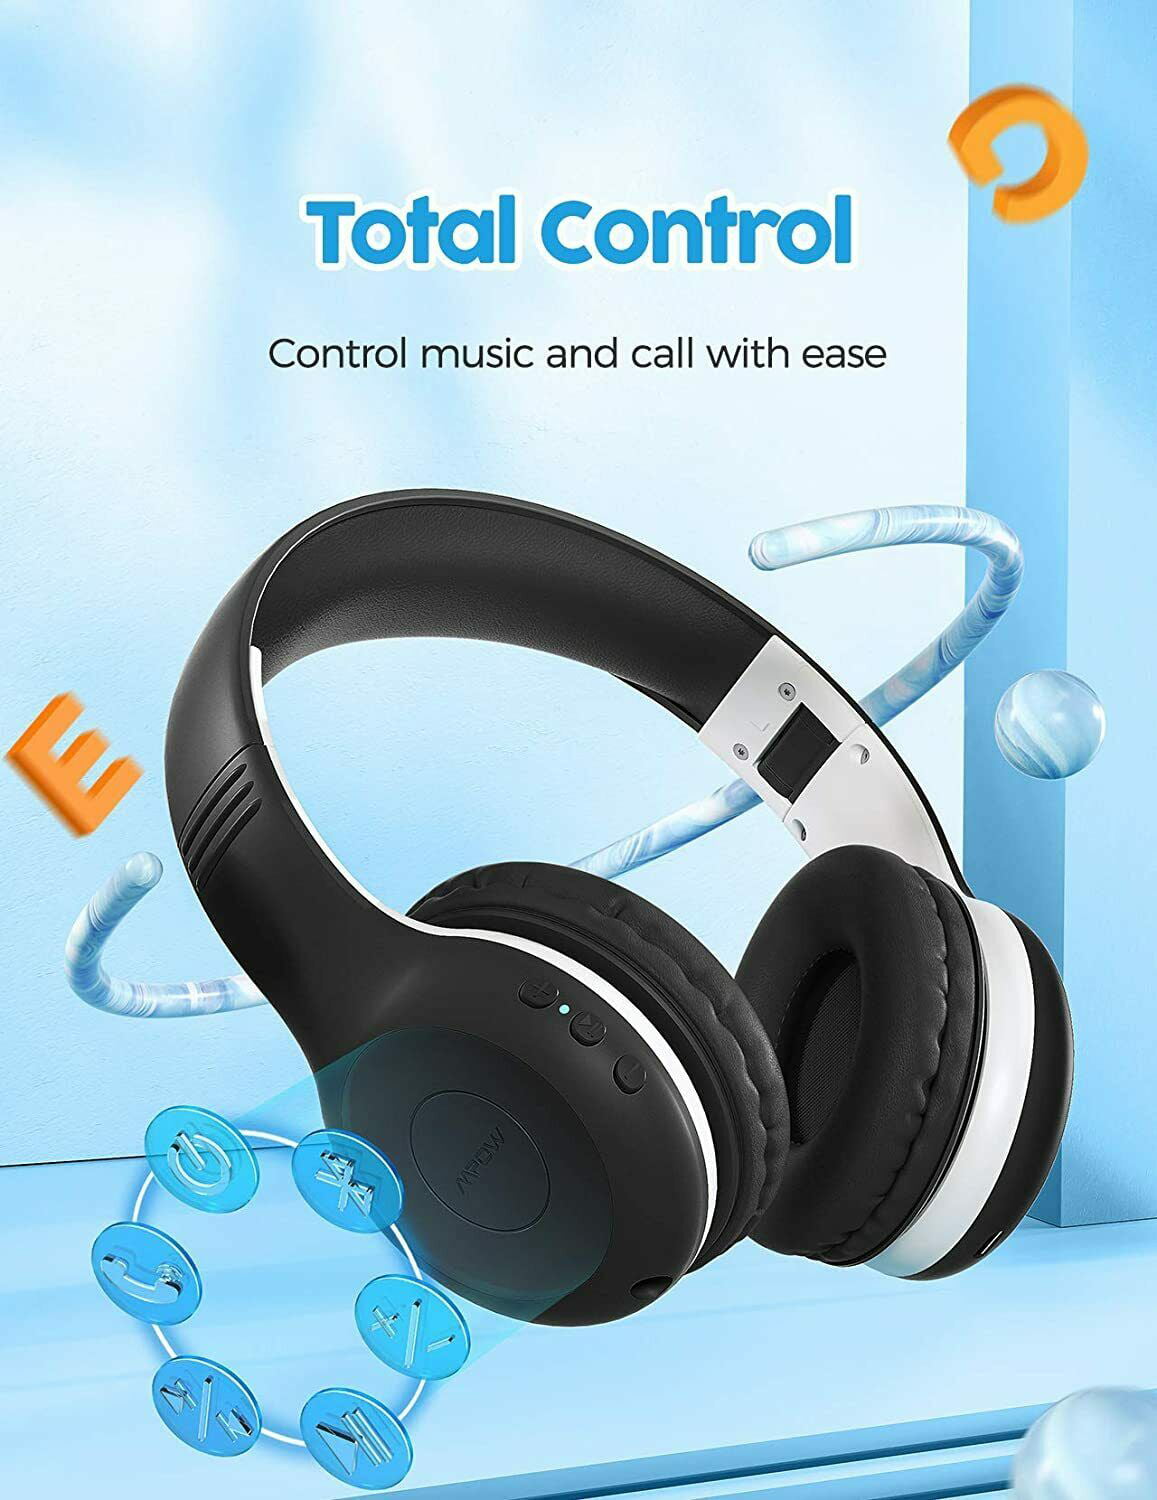 Mpow CH6 PLUS Kinder Kopfhörer Bluetooth 5.0 Headset HD Stereo Faltbar Headphone 